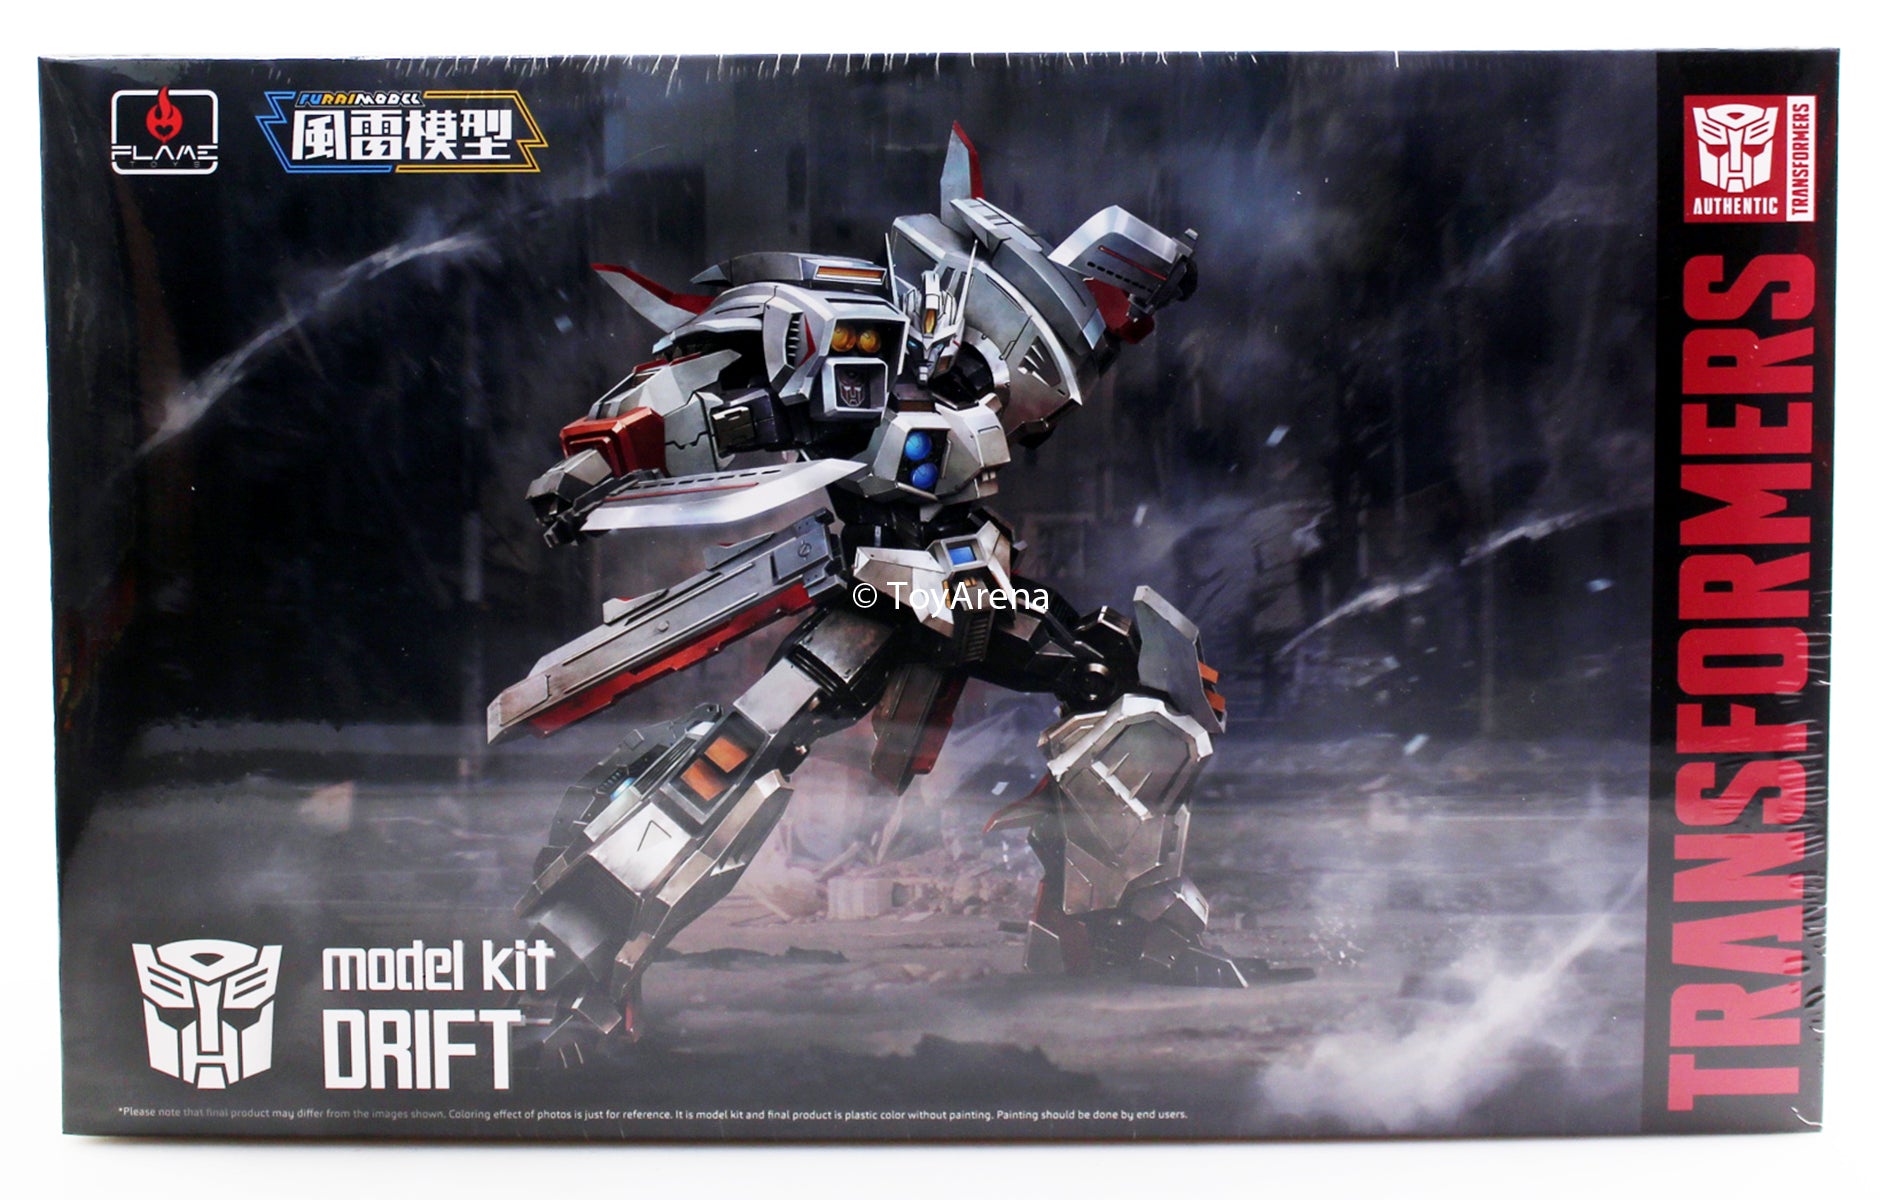 Flame Toys Furai 10 Transformers Drift Model Kit